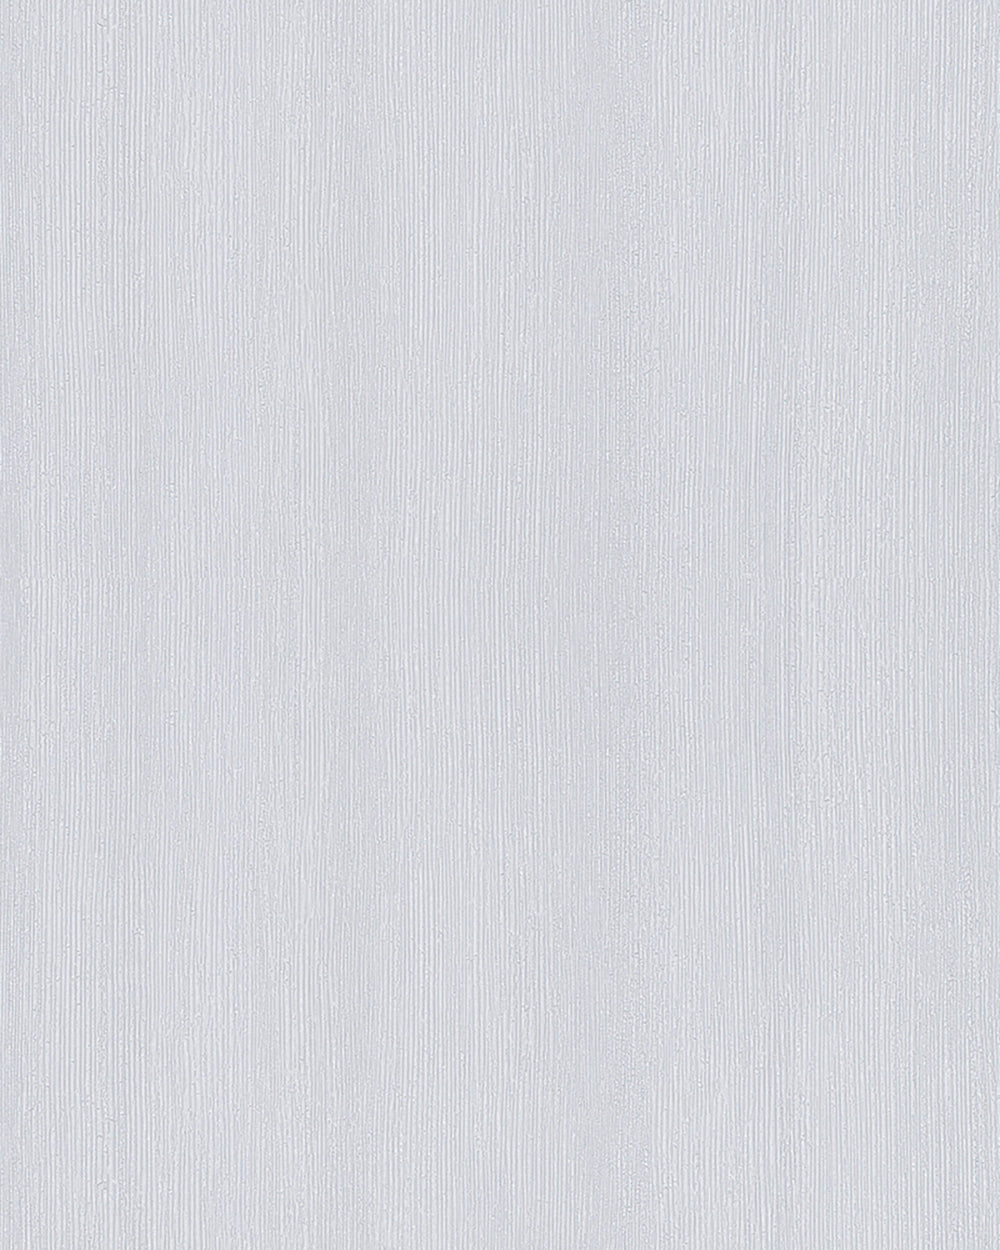 Avalon - Wood Grain plain wallpaper Marburg Roll Grey  31634